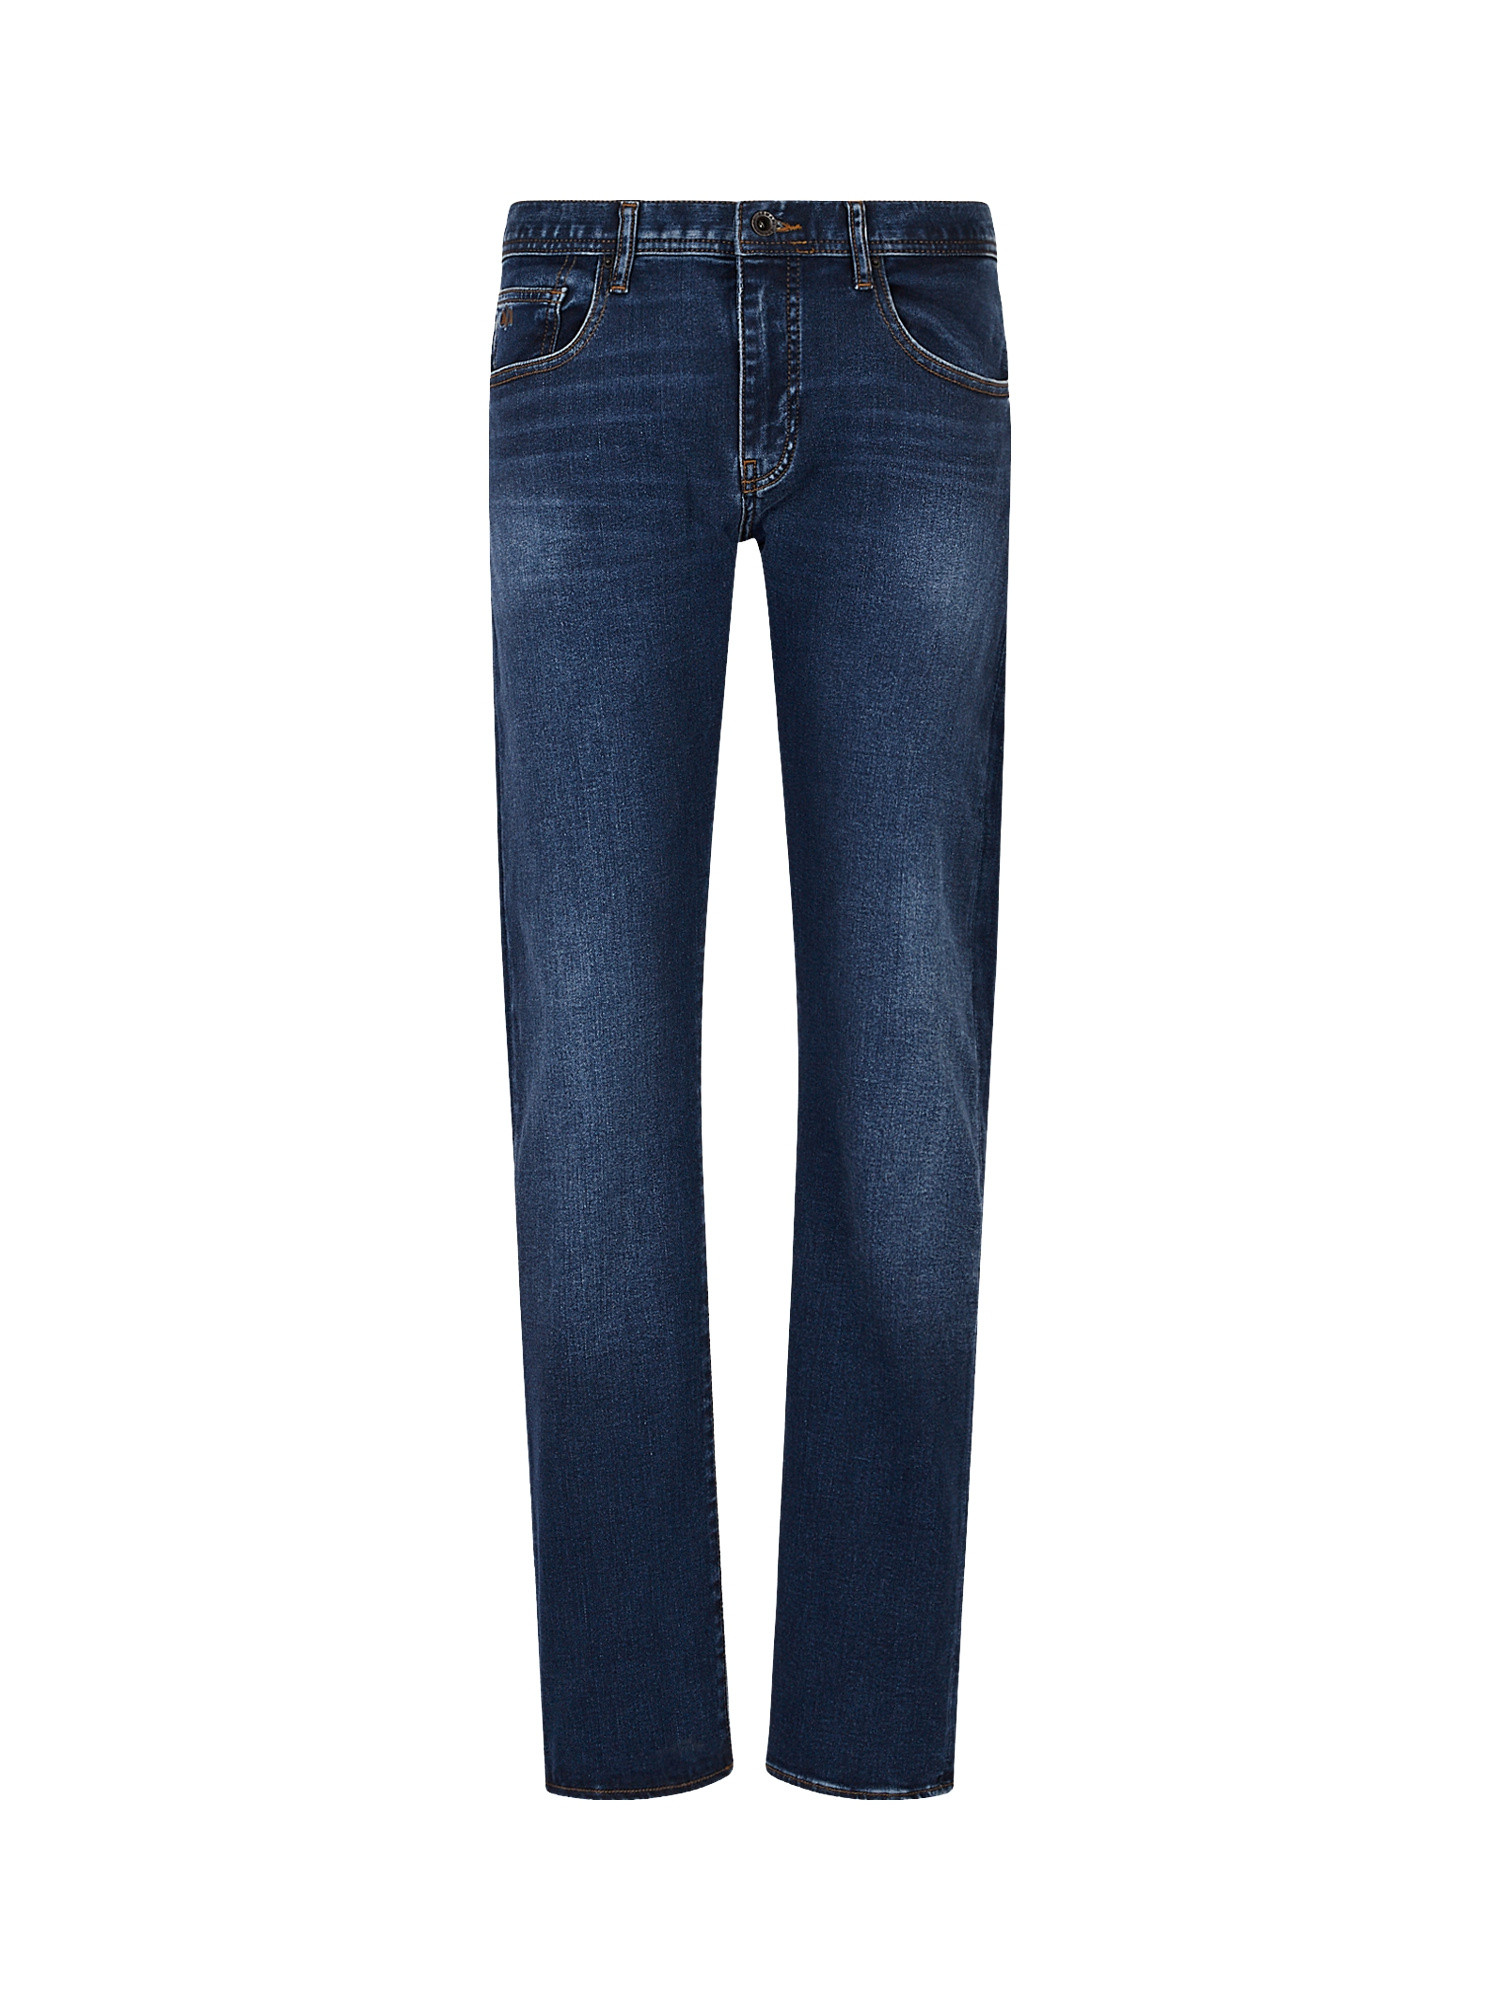 Armani Exchange - Jeans slim fit cinque tasche, Blu scuro, large image number 0